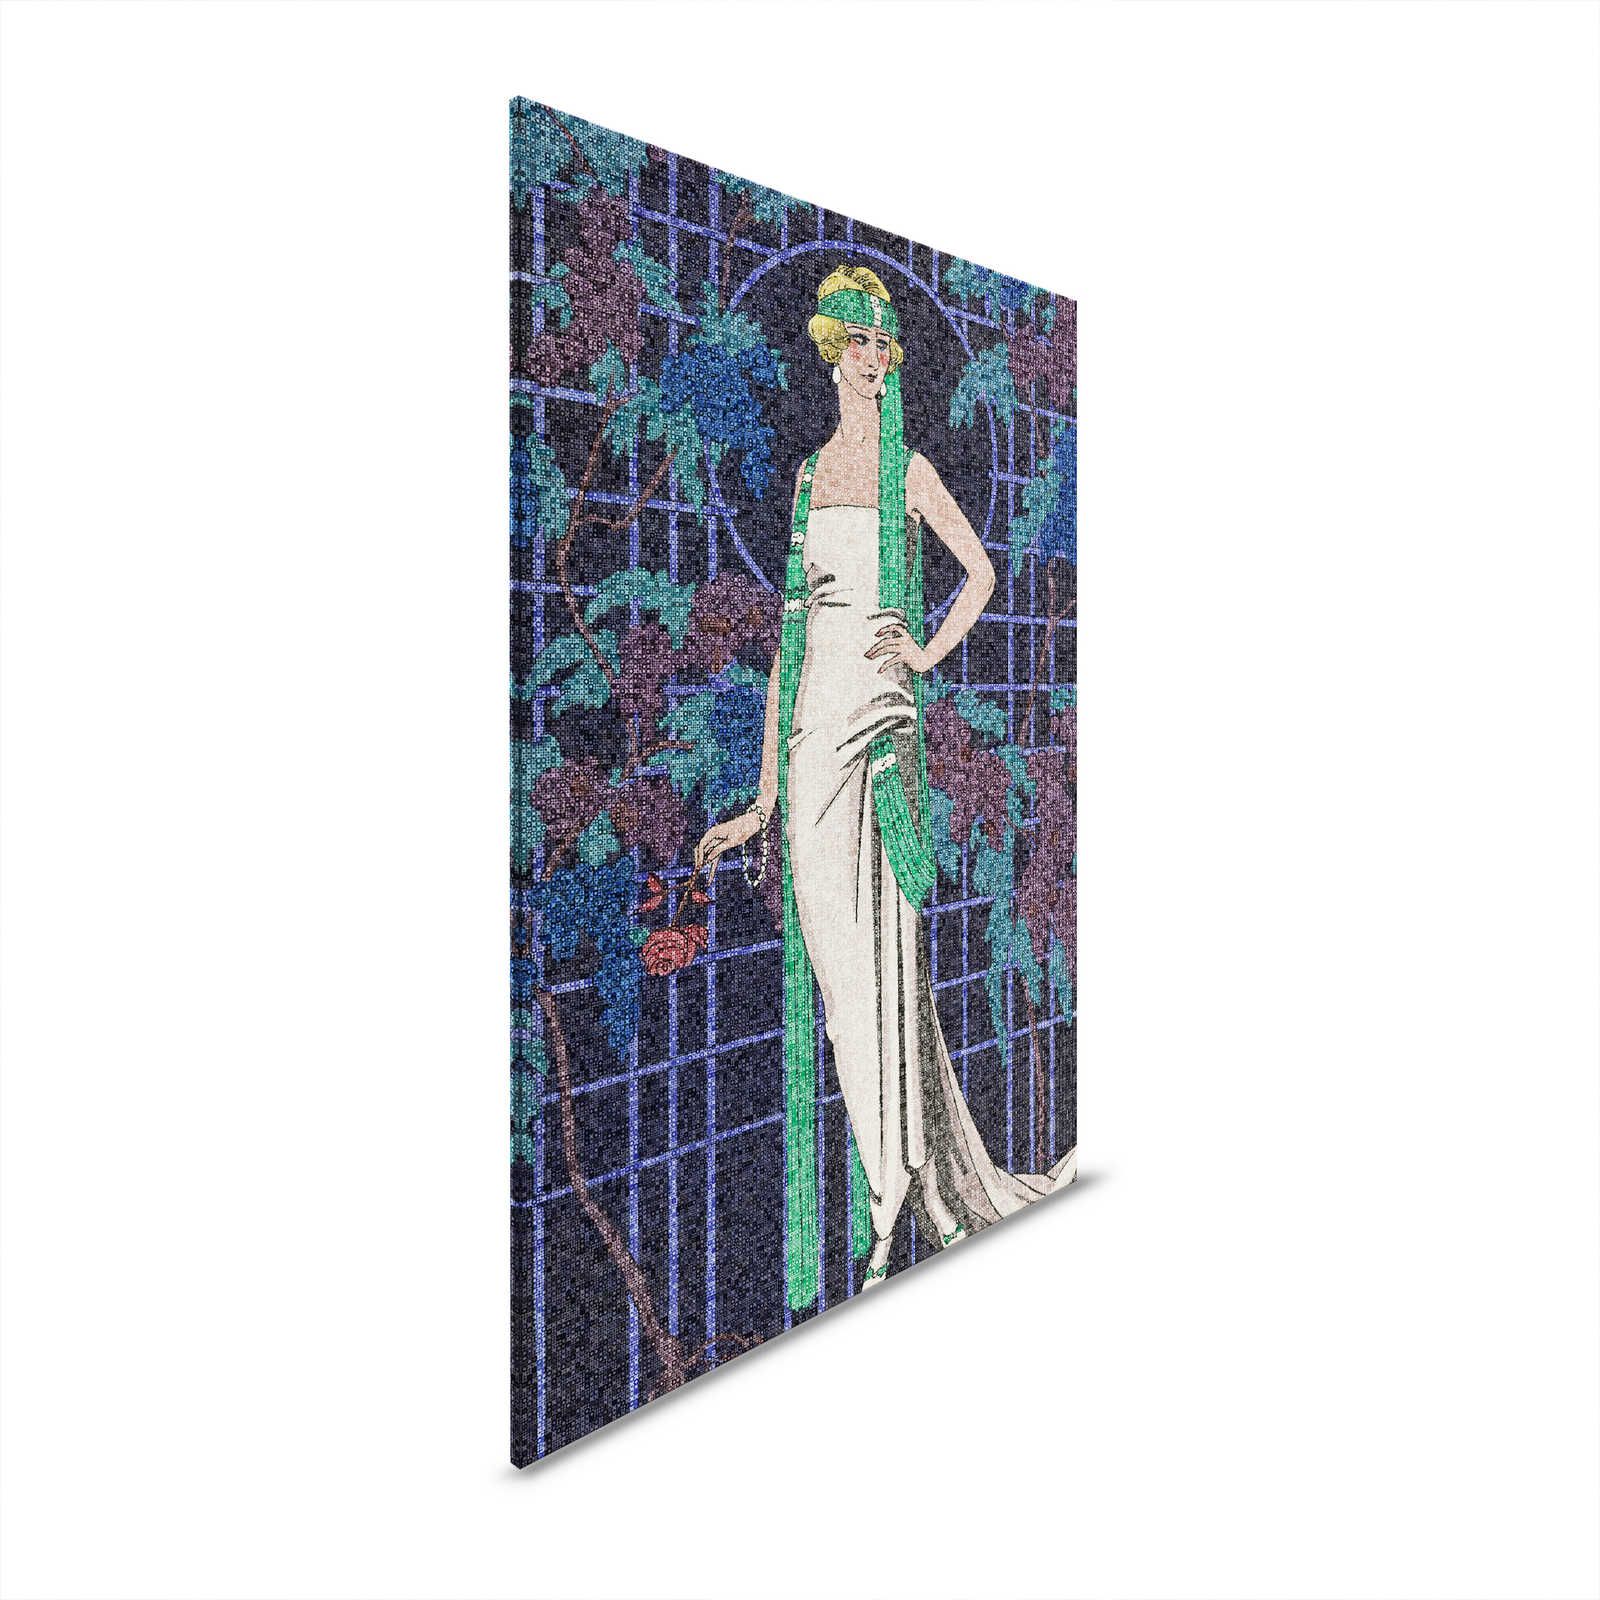 Scala 2 - Mosaic Canvas Painting Art Deco Women Motif 20s Style - 0.60 m x 0.90 m
